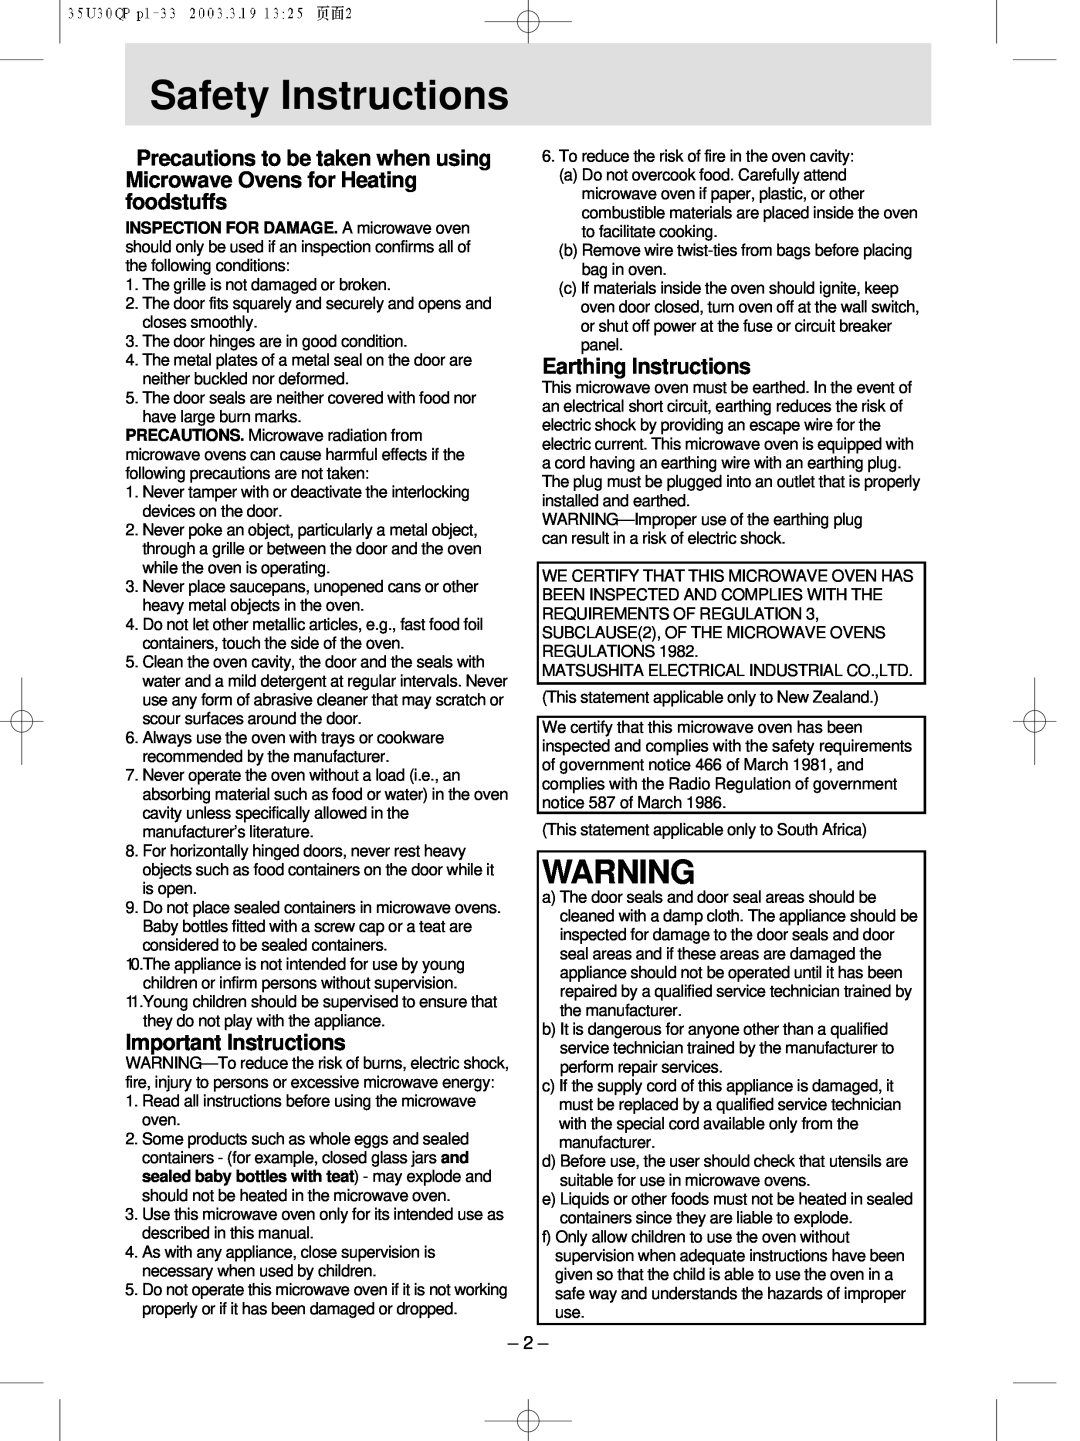 Panasonic NN-MX21 manual Safety Instructions, Important Instructions, Earthing Instructions 